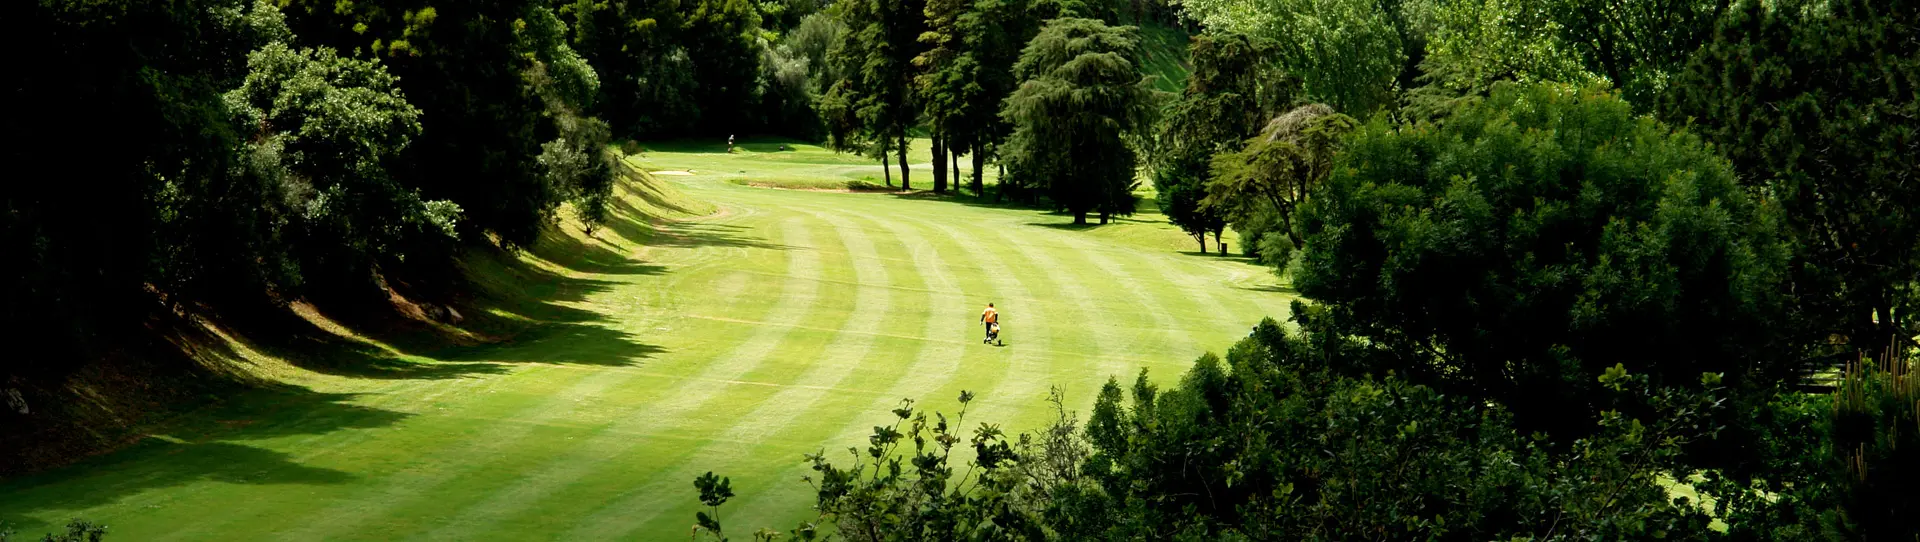 Portugal golf courses - Lisbon Sports Club - Photo 3